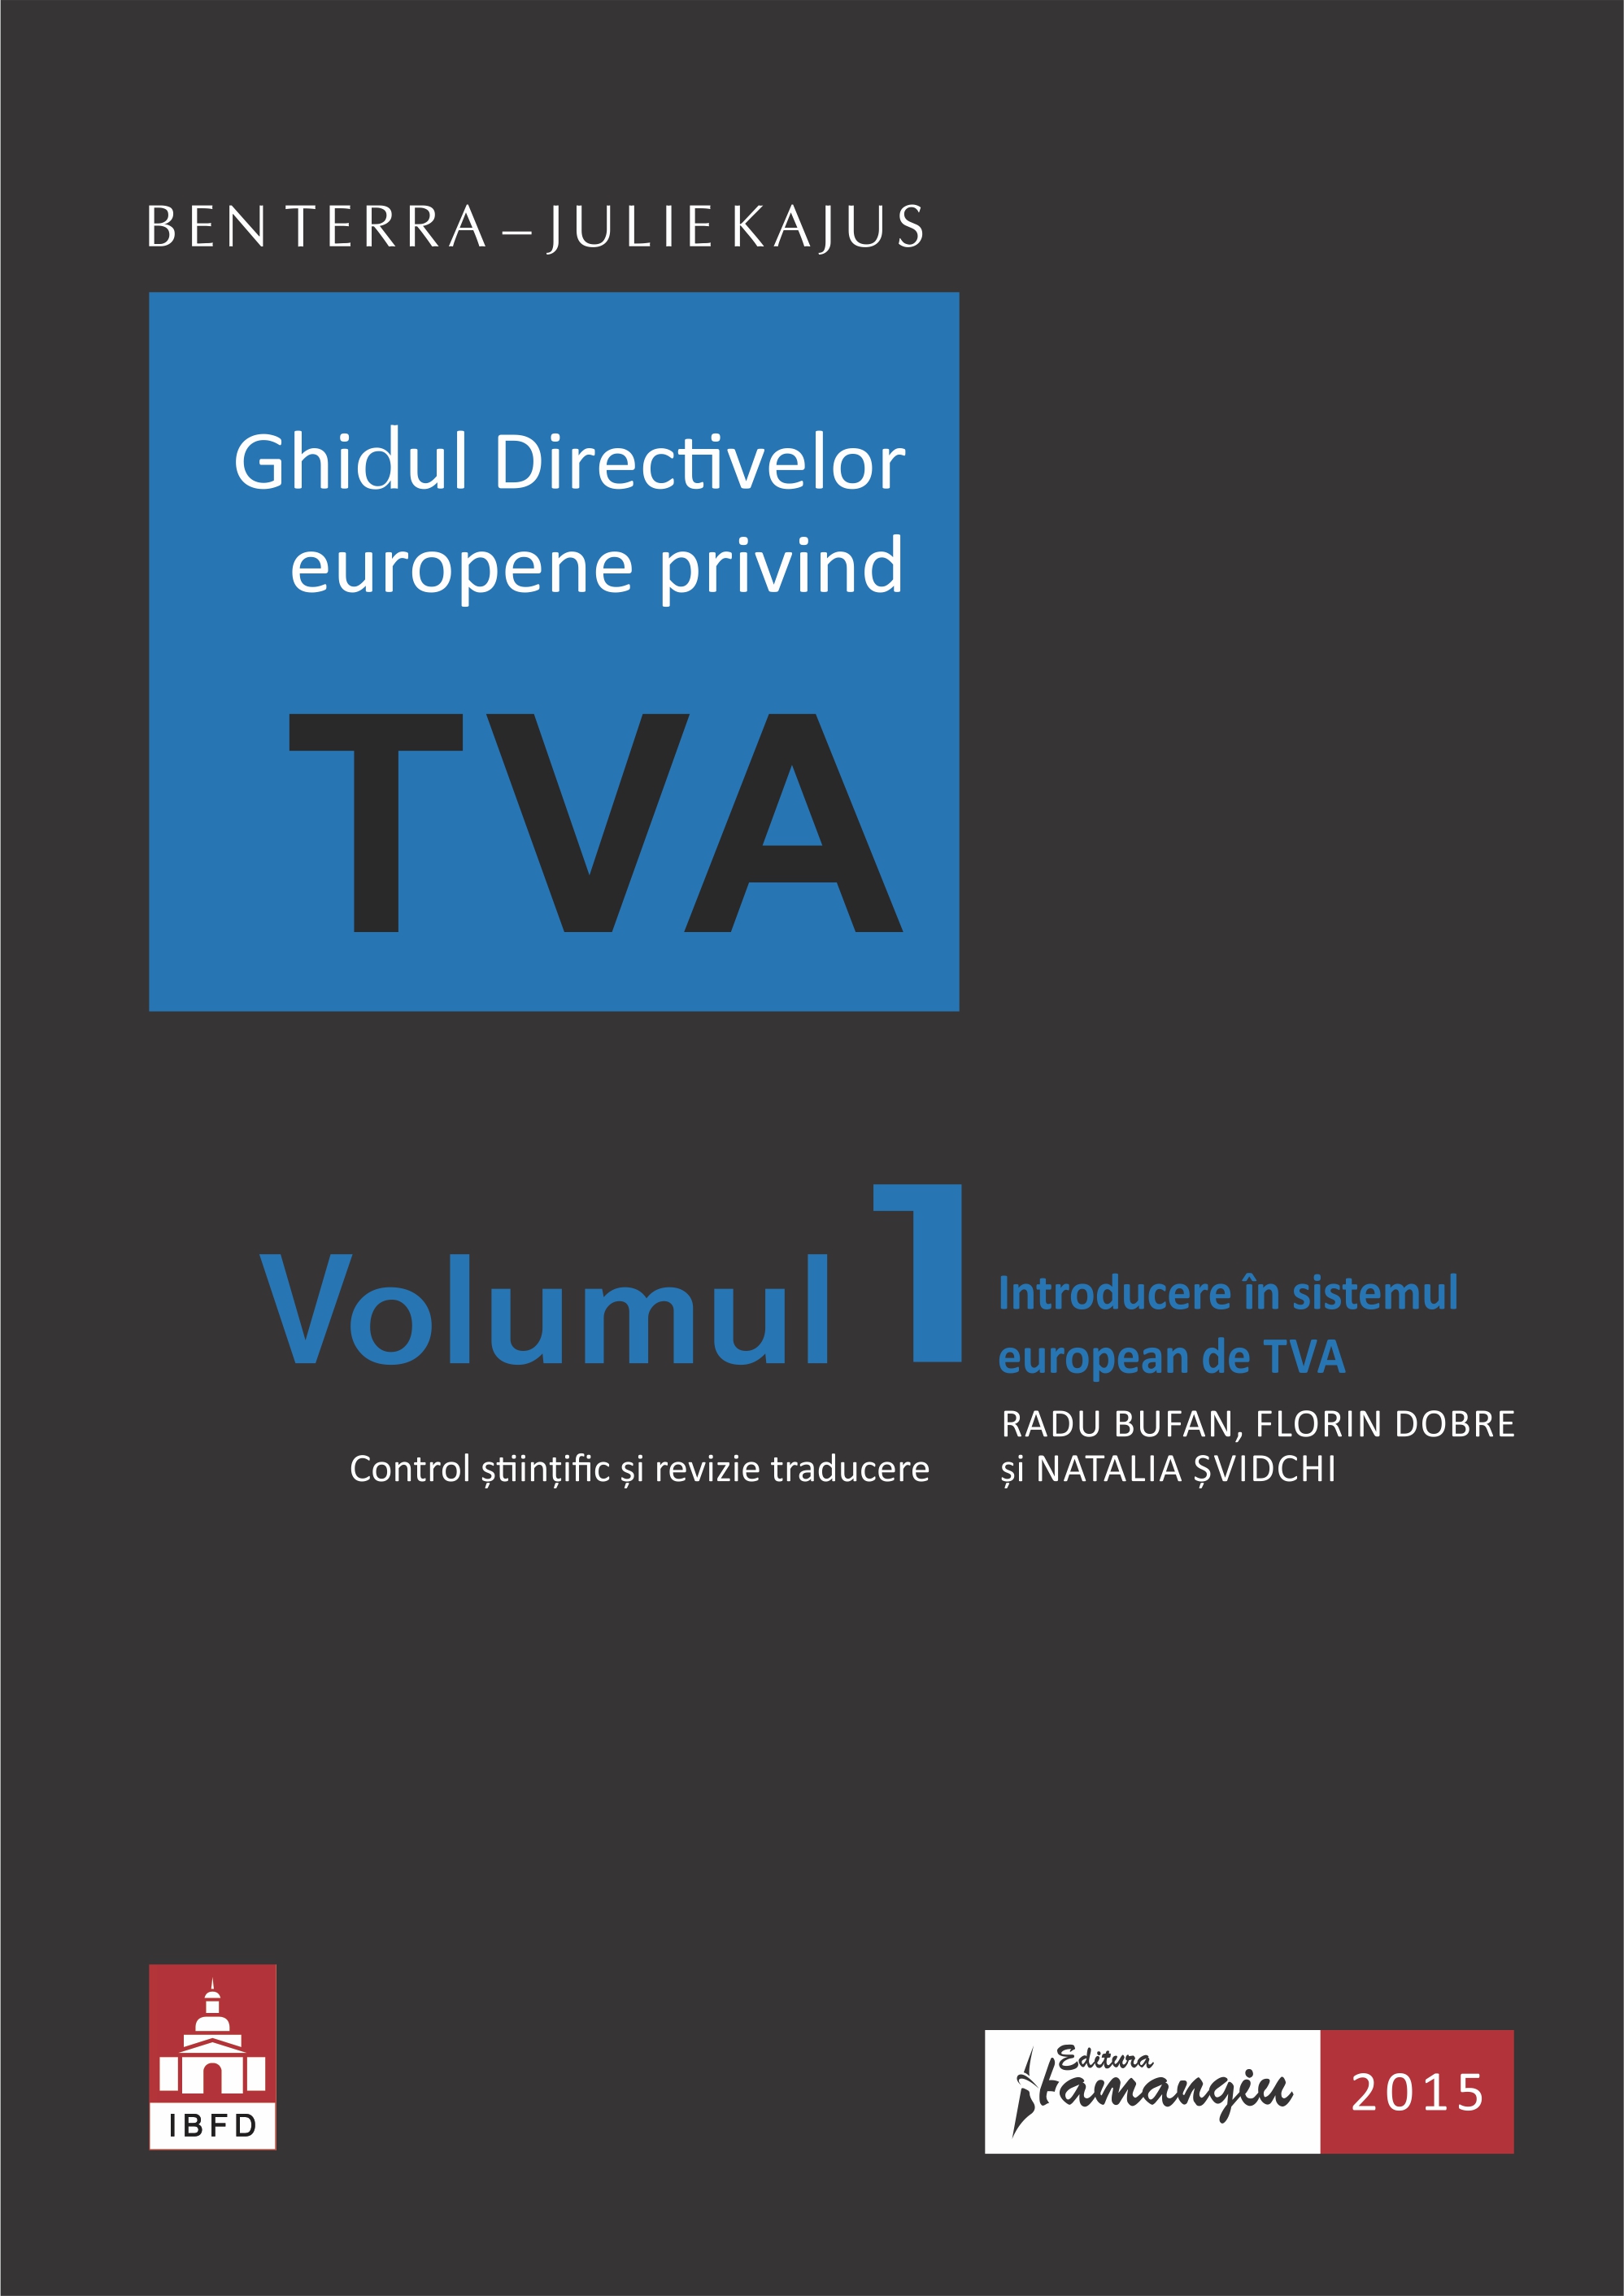 Ghidul directivelor europene privind tva Vol. 1. Introducere in sistemul european de tva - Ben Terra